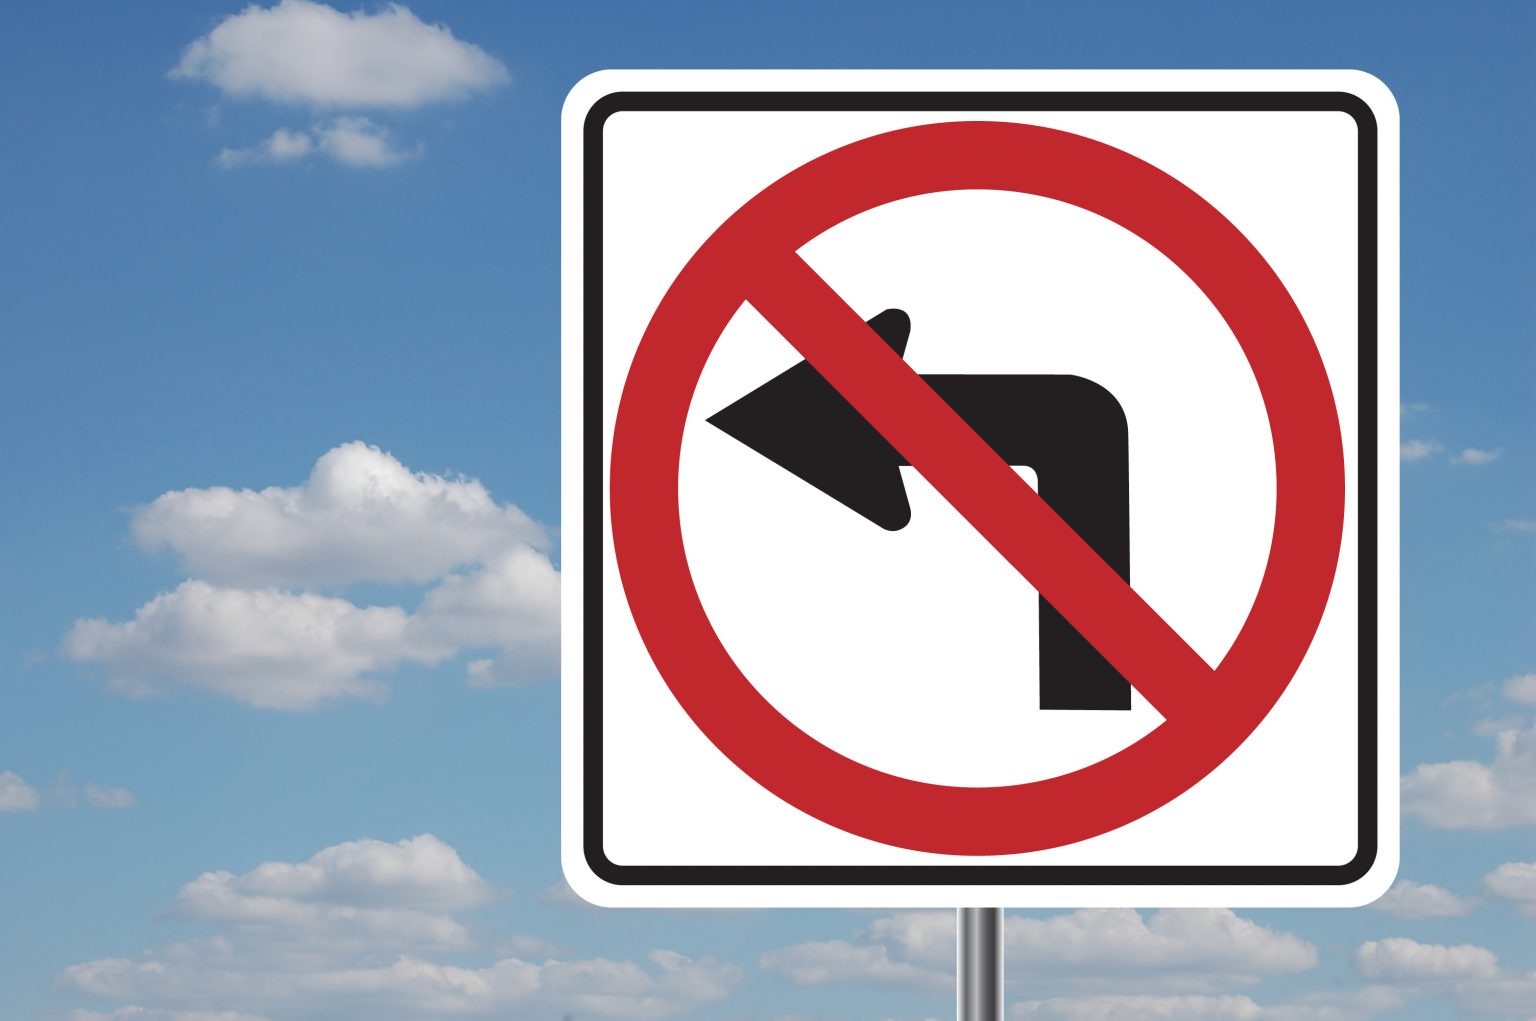 Знак запрещающий движение налево. Поворот налево запрещен. Знаки дорожного движения поворот налево запрещен. Знак поворот запрещен. Знак запрета поворота налево.